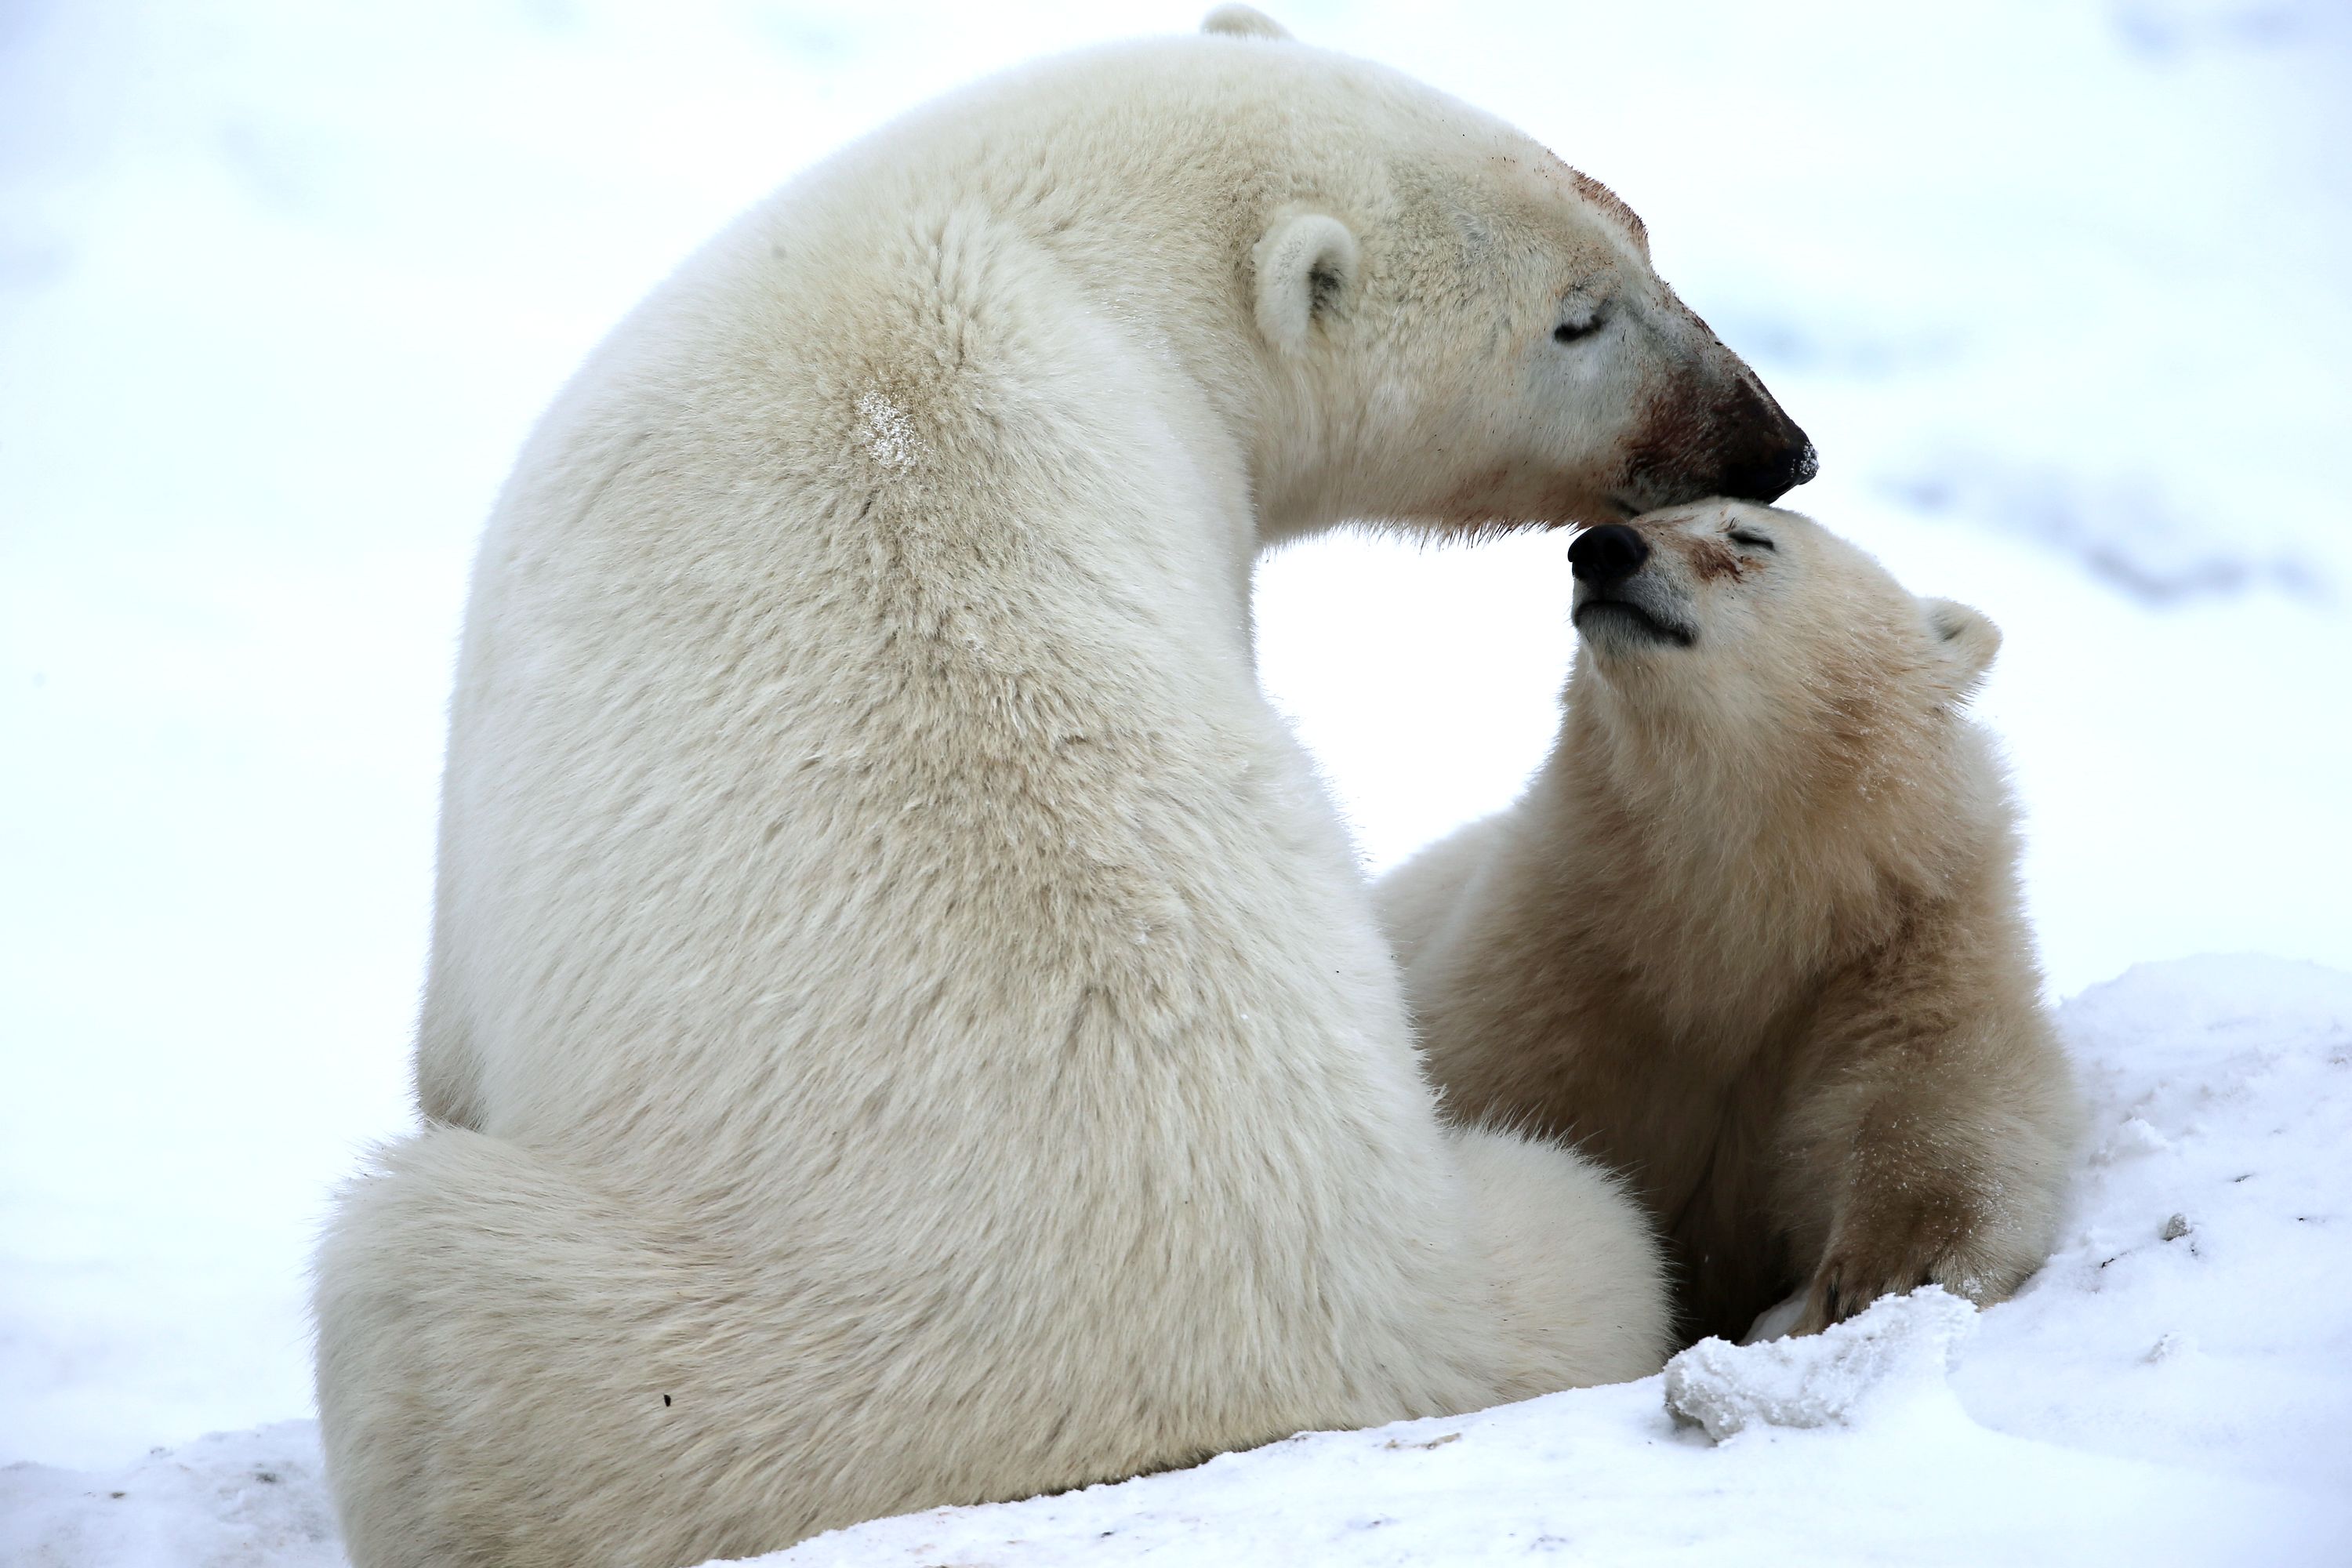 Adopt a Polar Bear - Wildlife Adoption and Gift Center